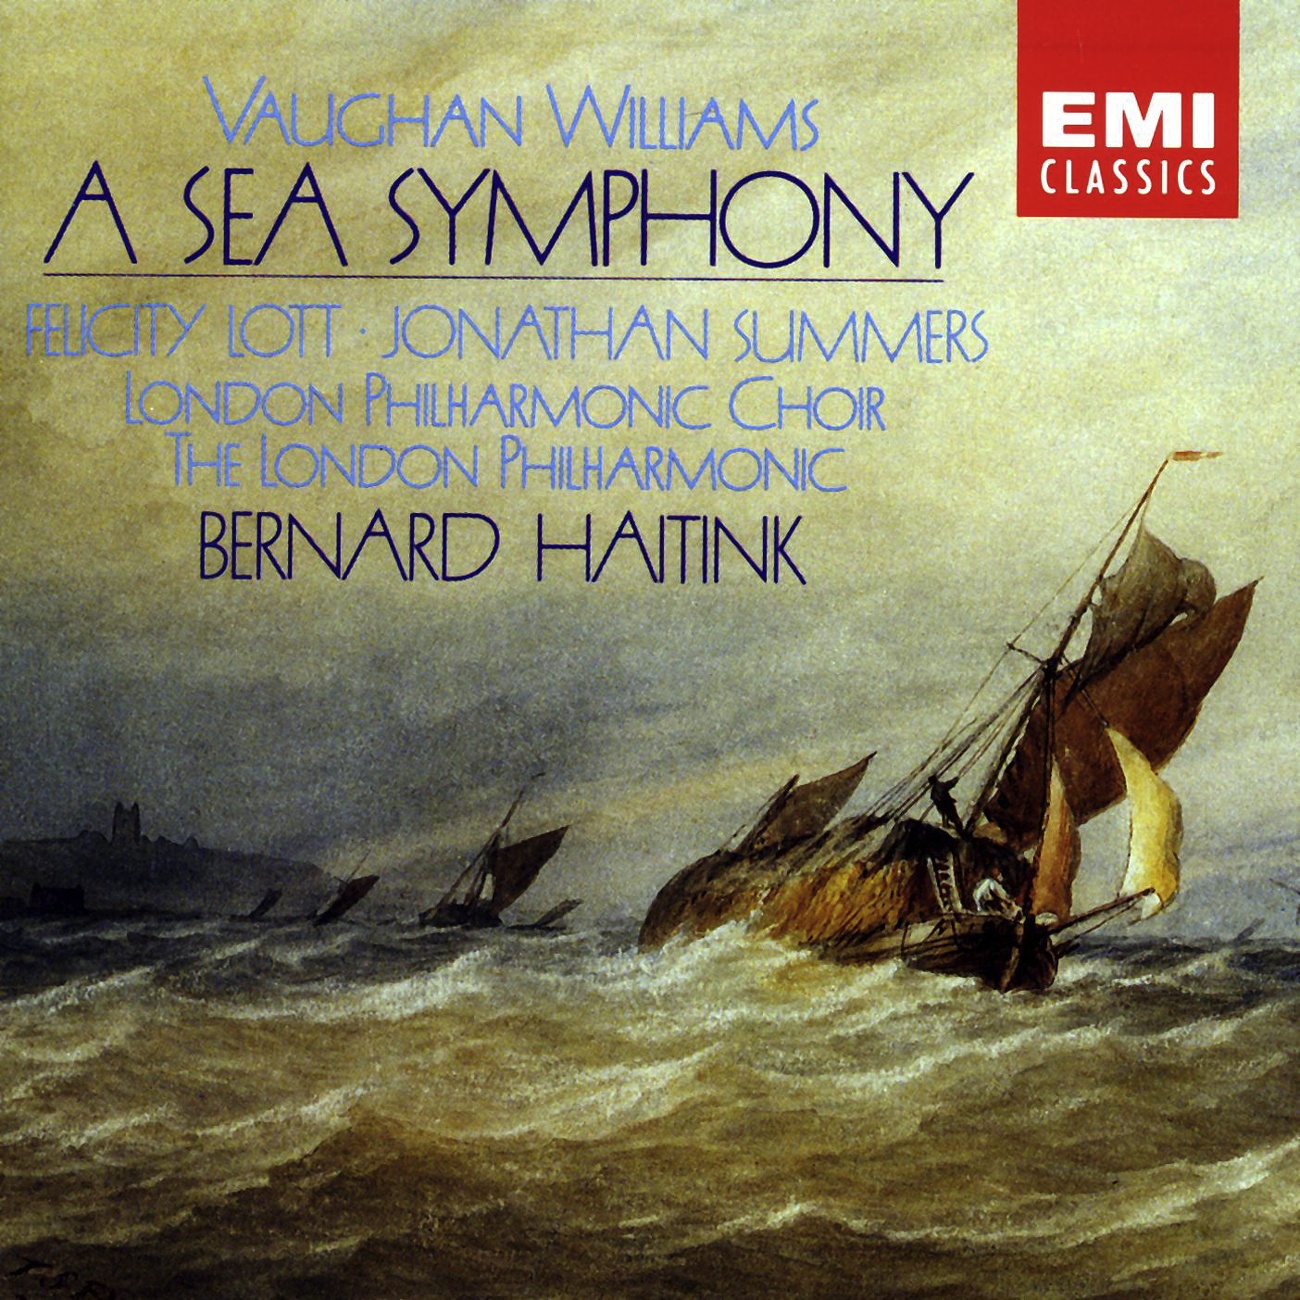 Vaughan Williams: A Sea Symphony: III. Scherzo, The Waves